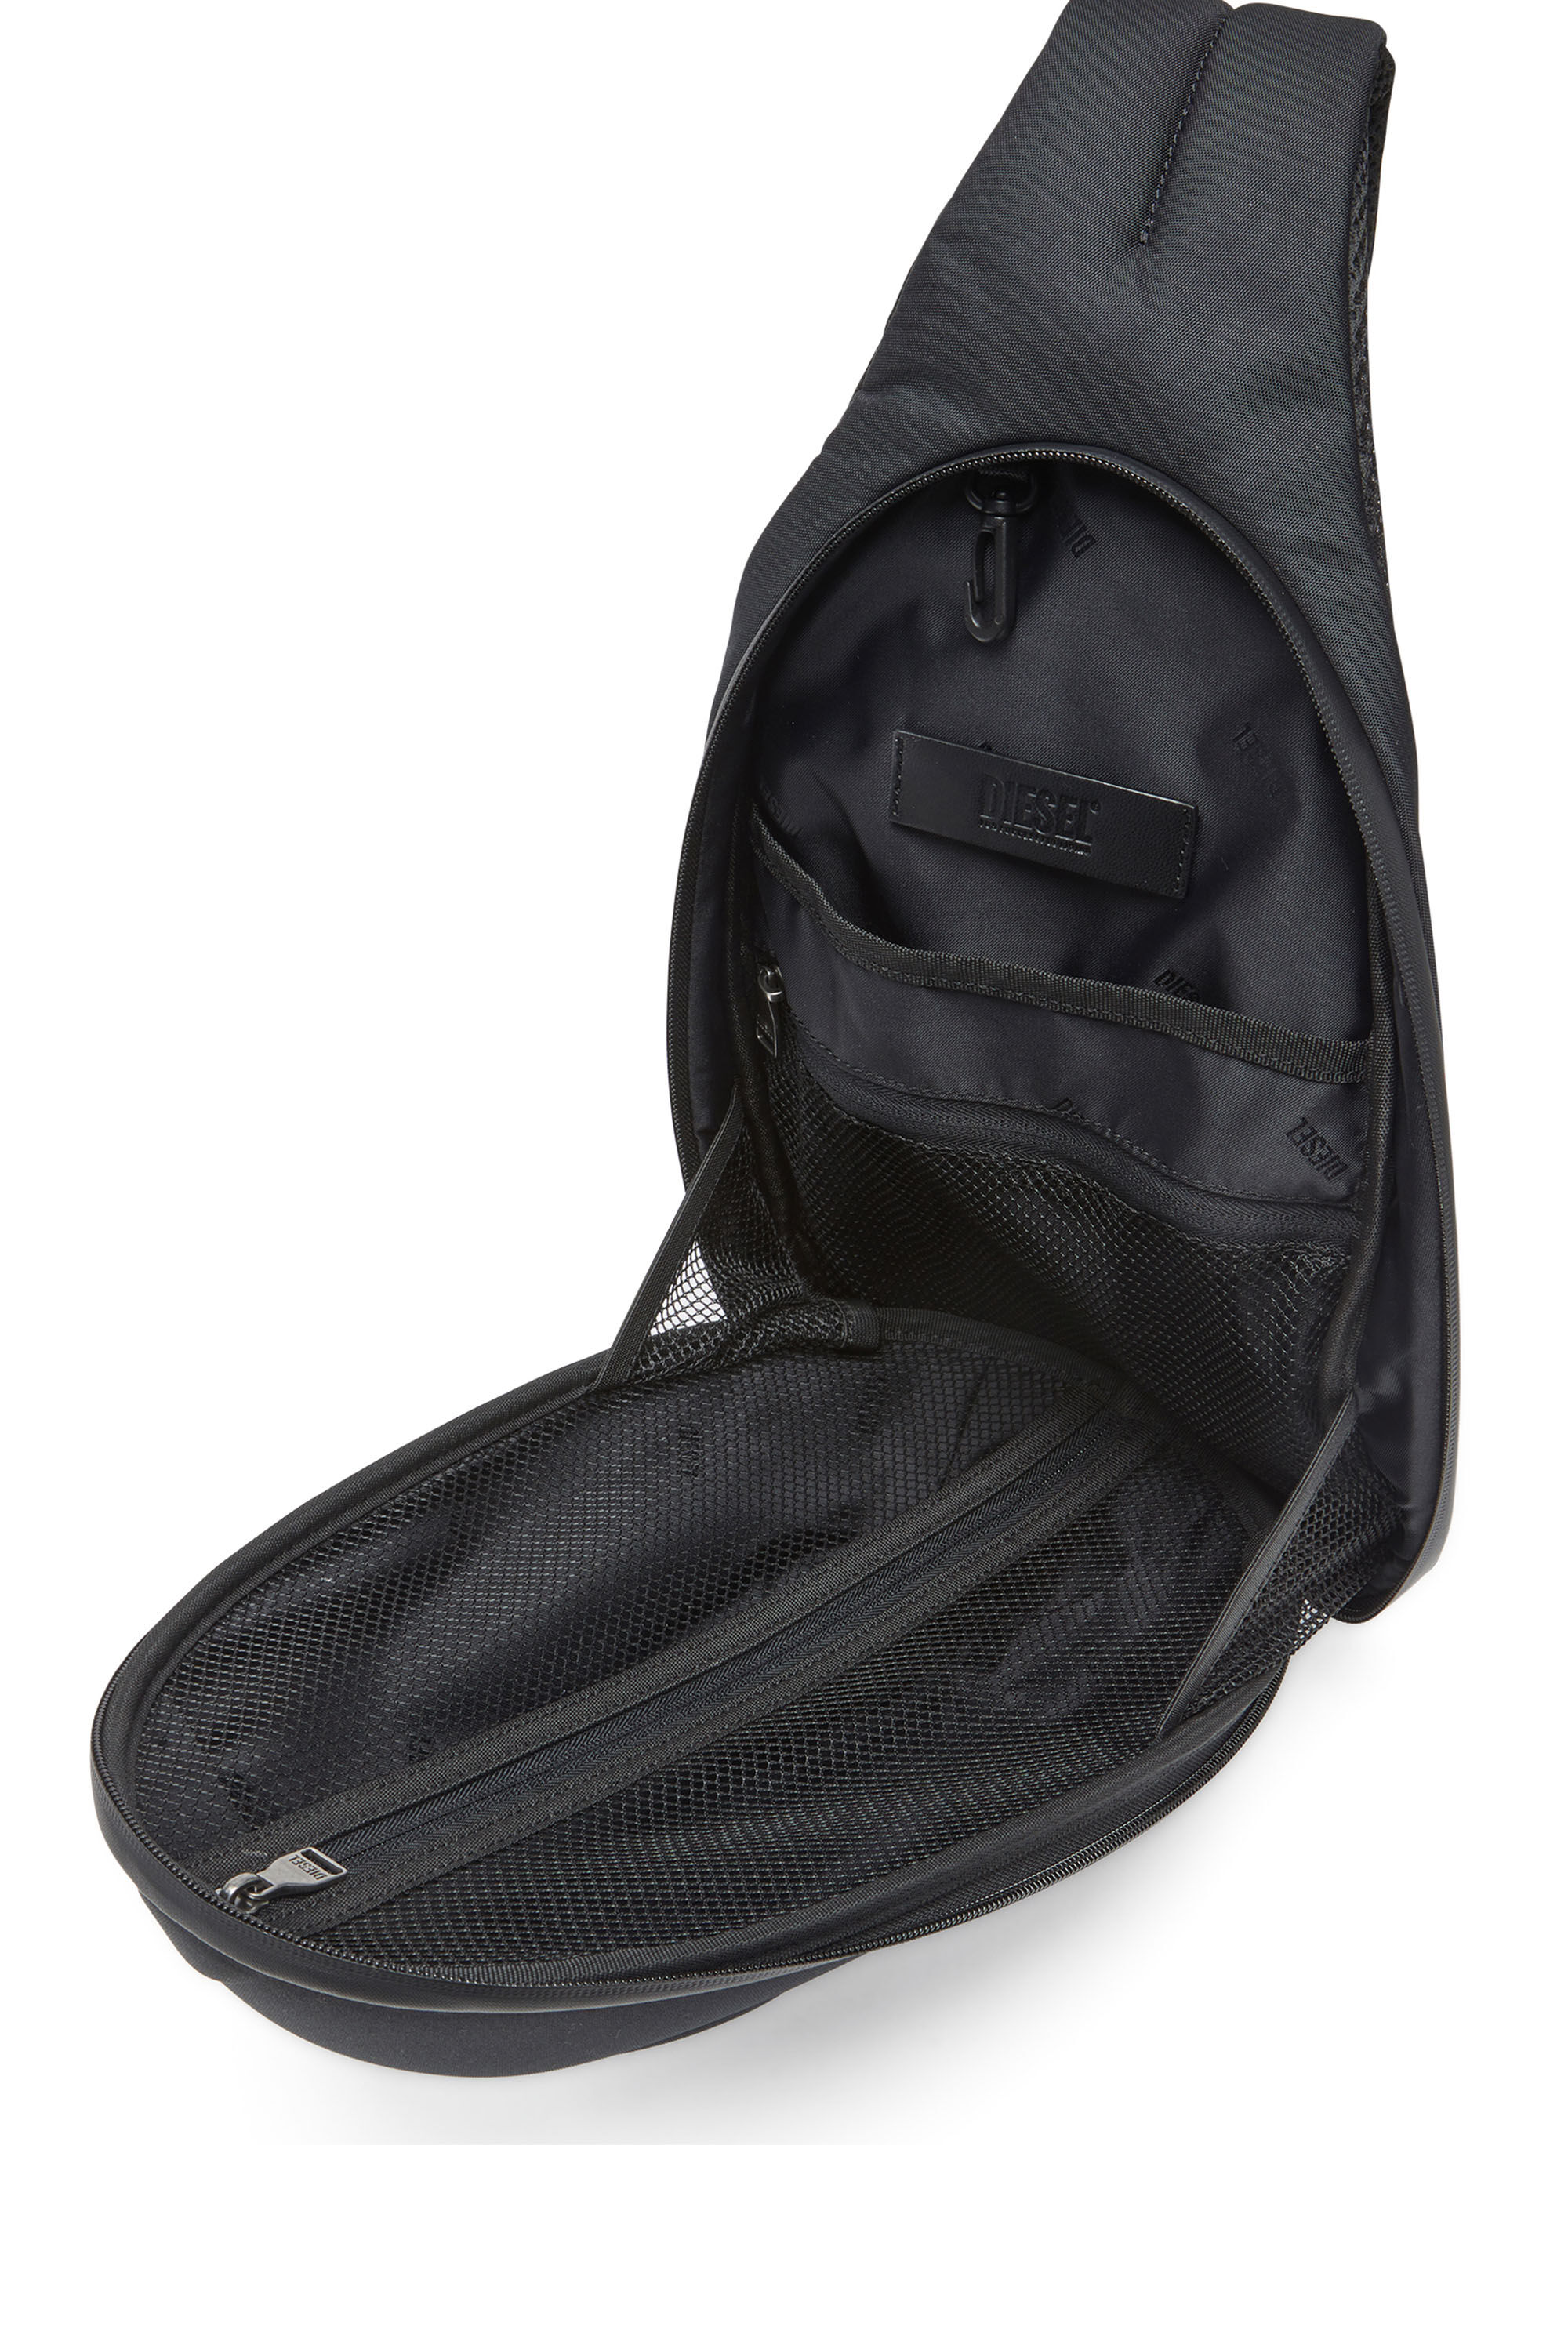 Men's 1DR-Pod Sling Bag - Hard shell sling bag | Black | Diesel